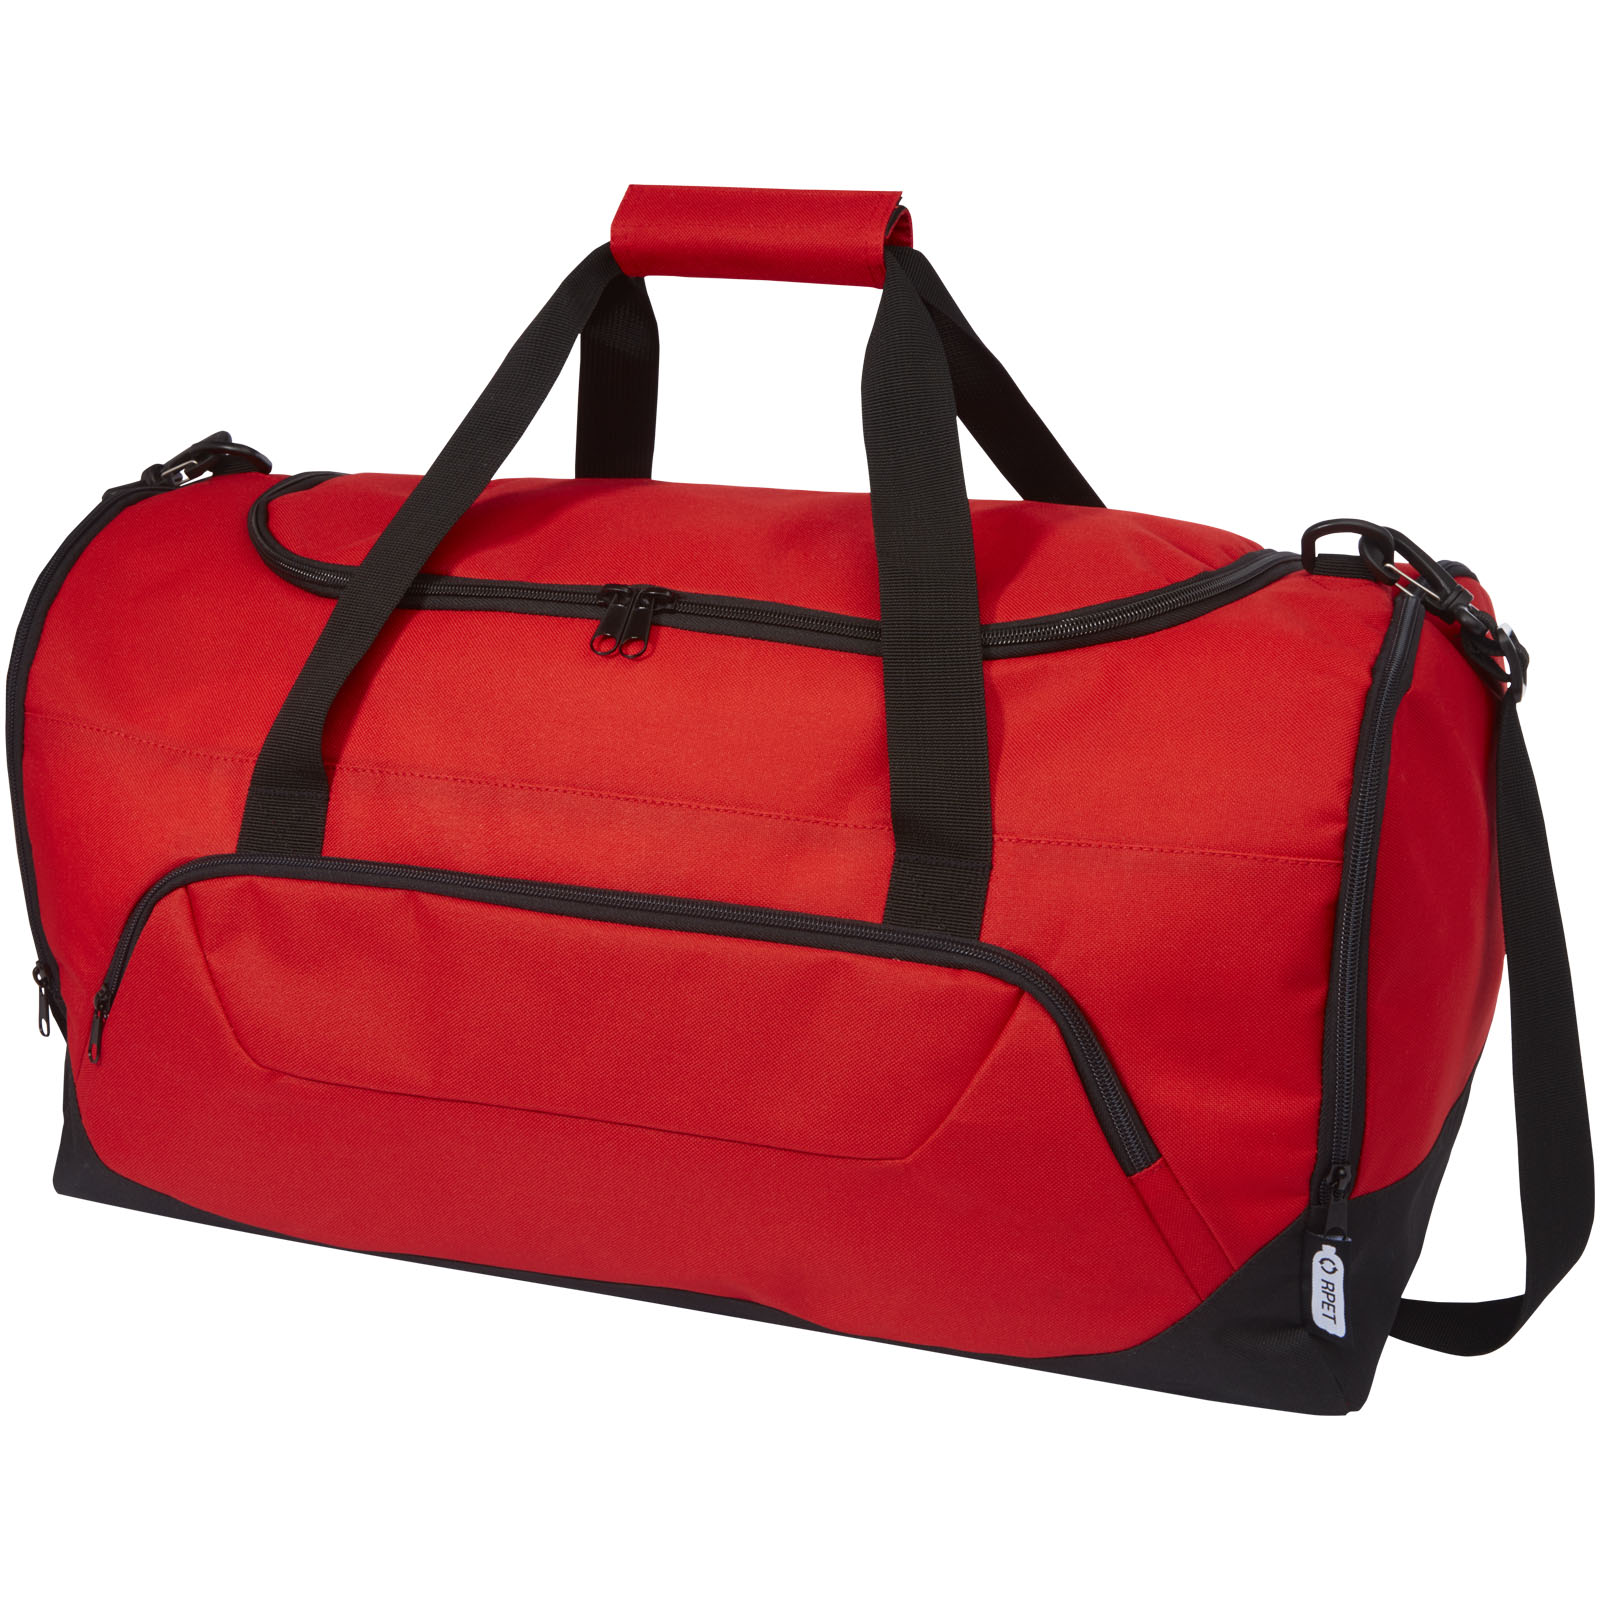 Travel bags - Retrend GRS RPET duffel bag 40L